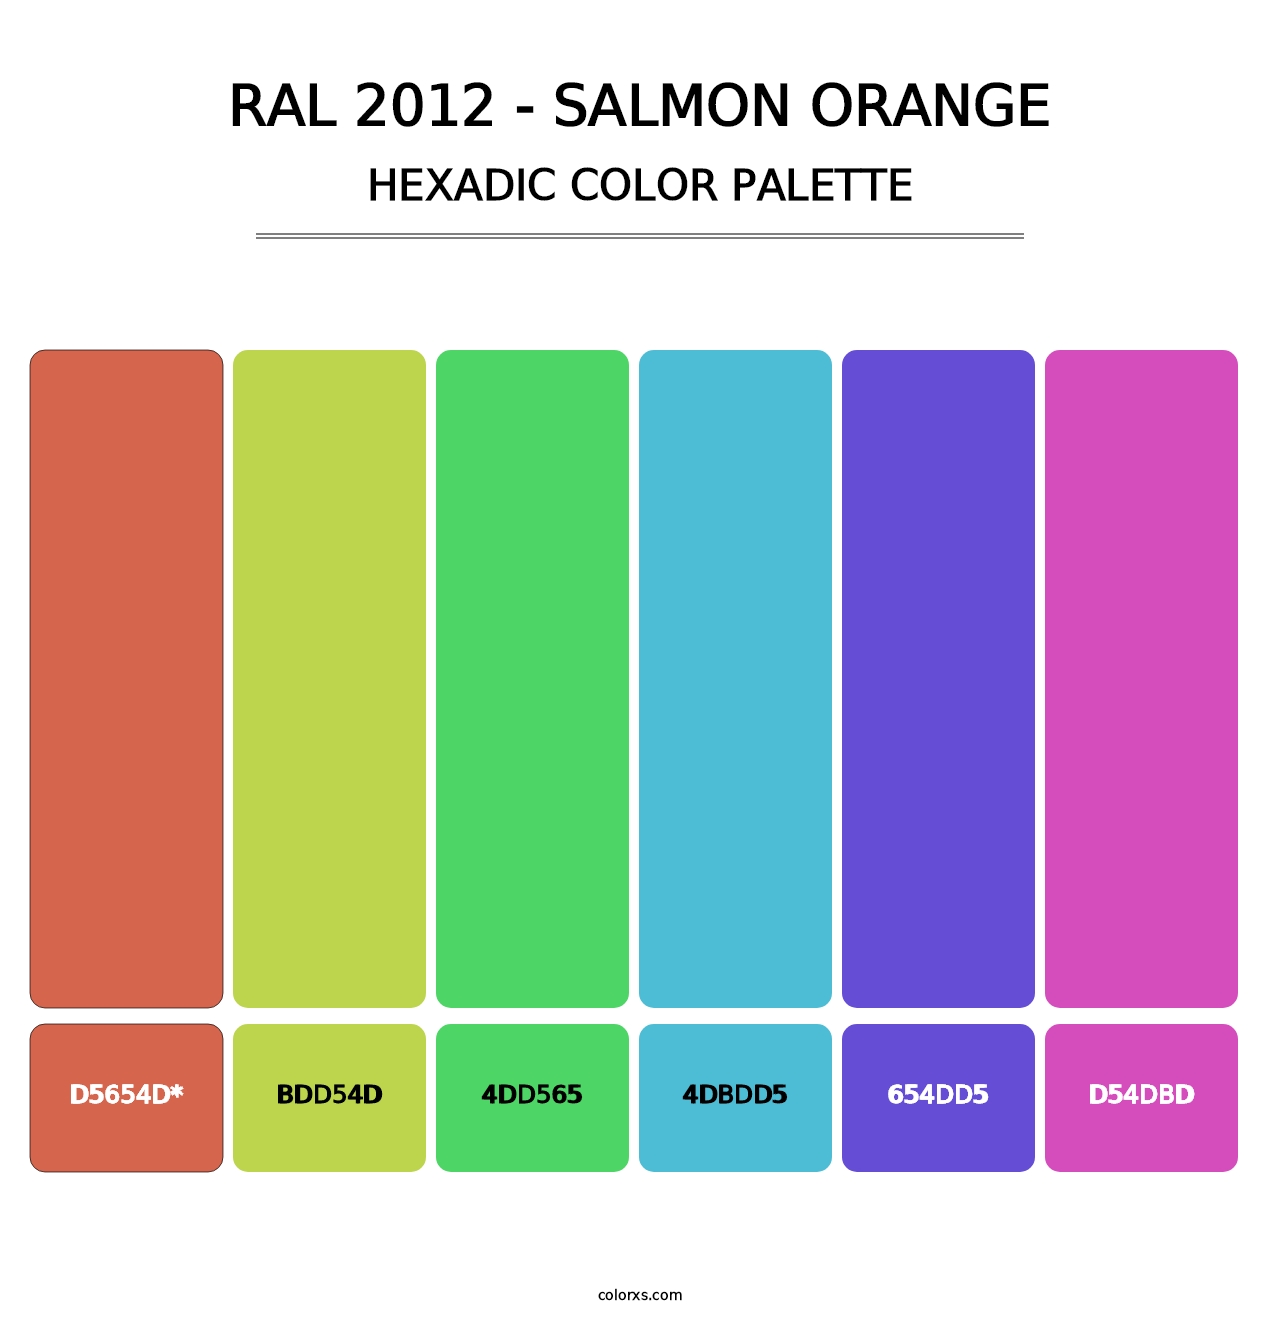 RAL 2012 - Salmon Orange - Hexadic Color Palette